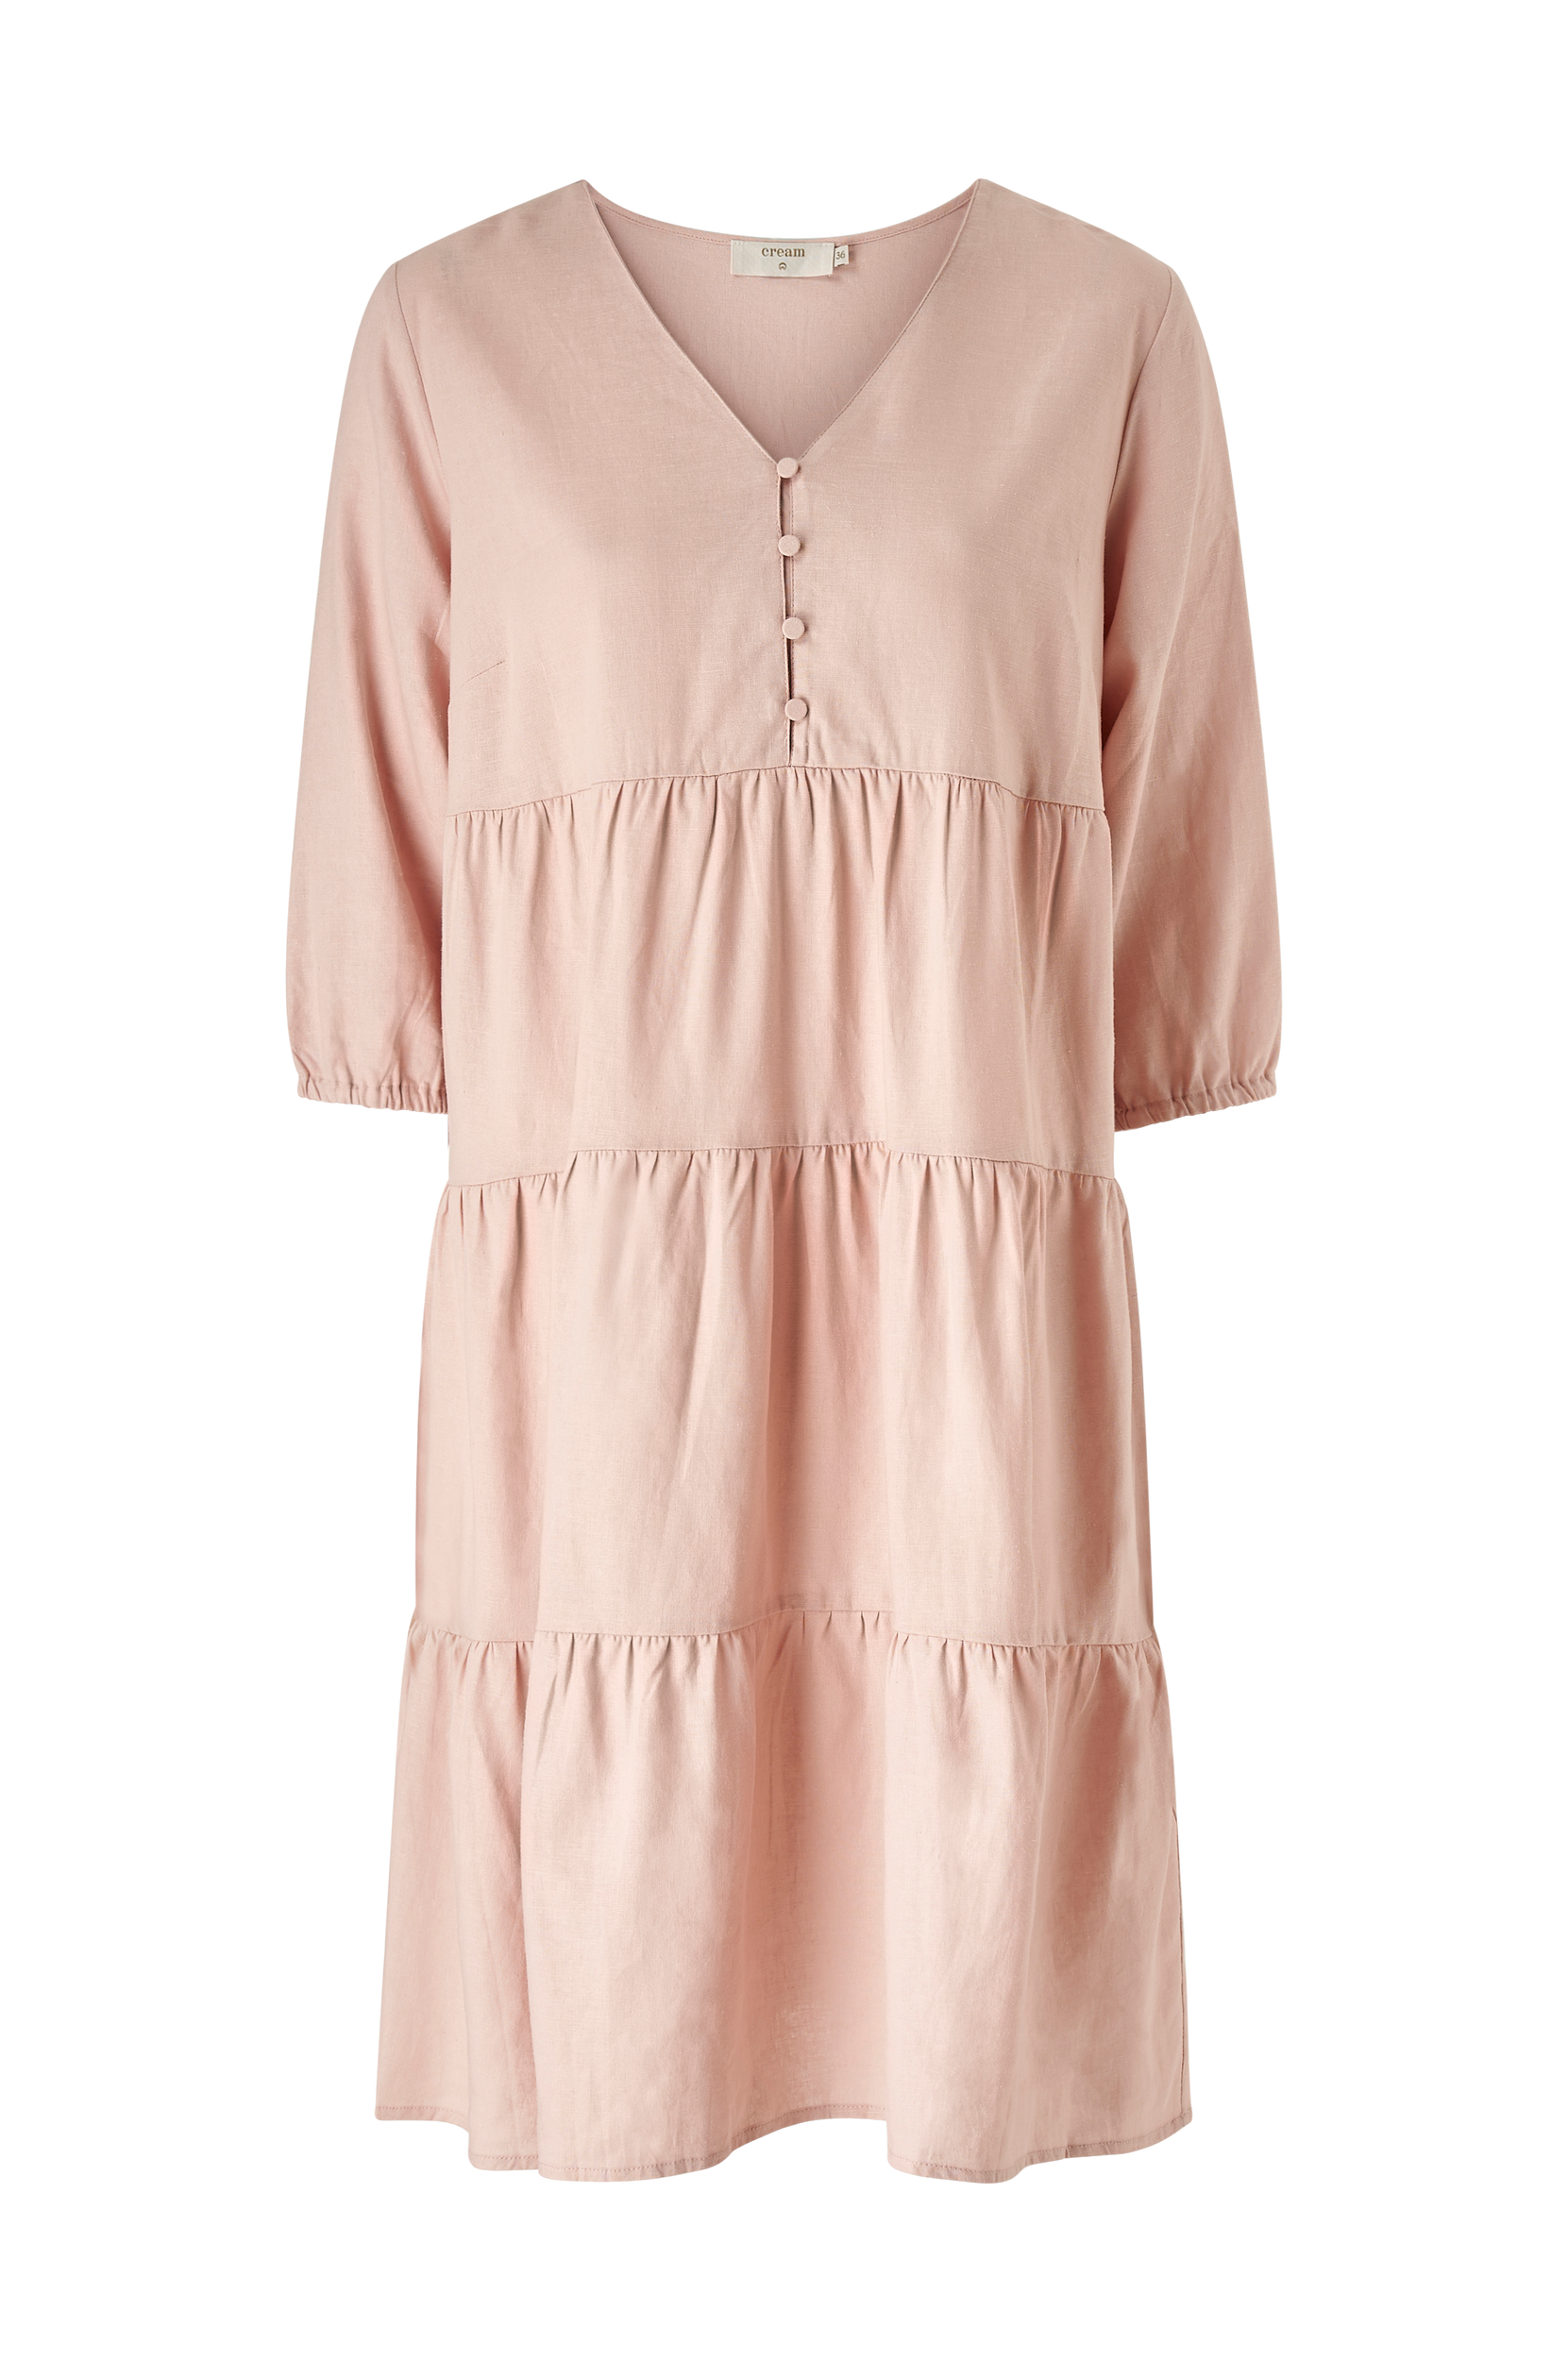 Mekko EstaCR Dress, Cream